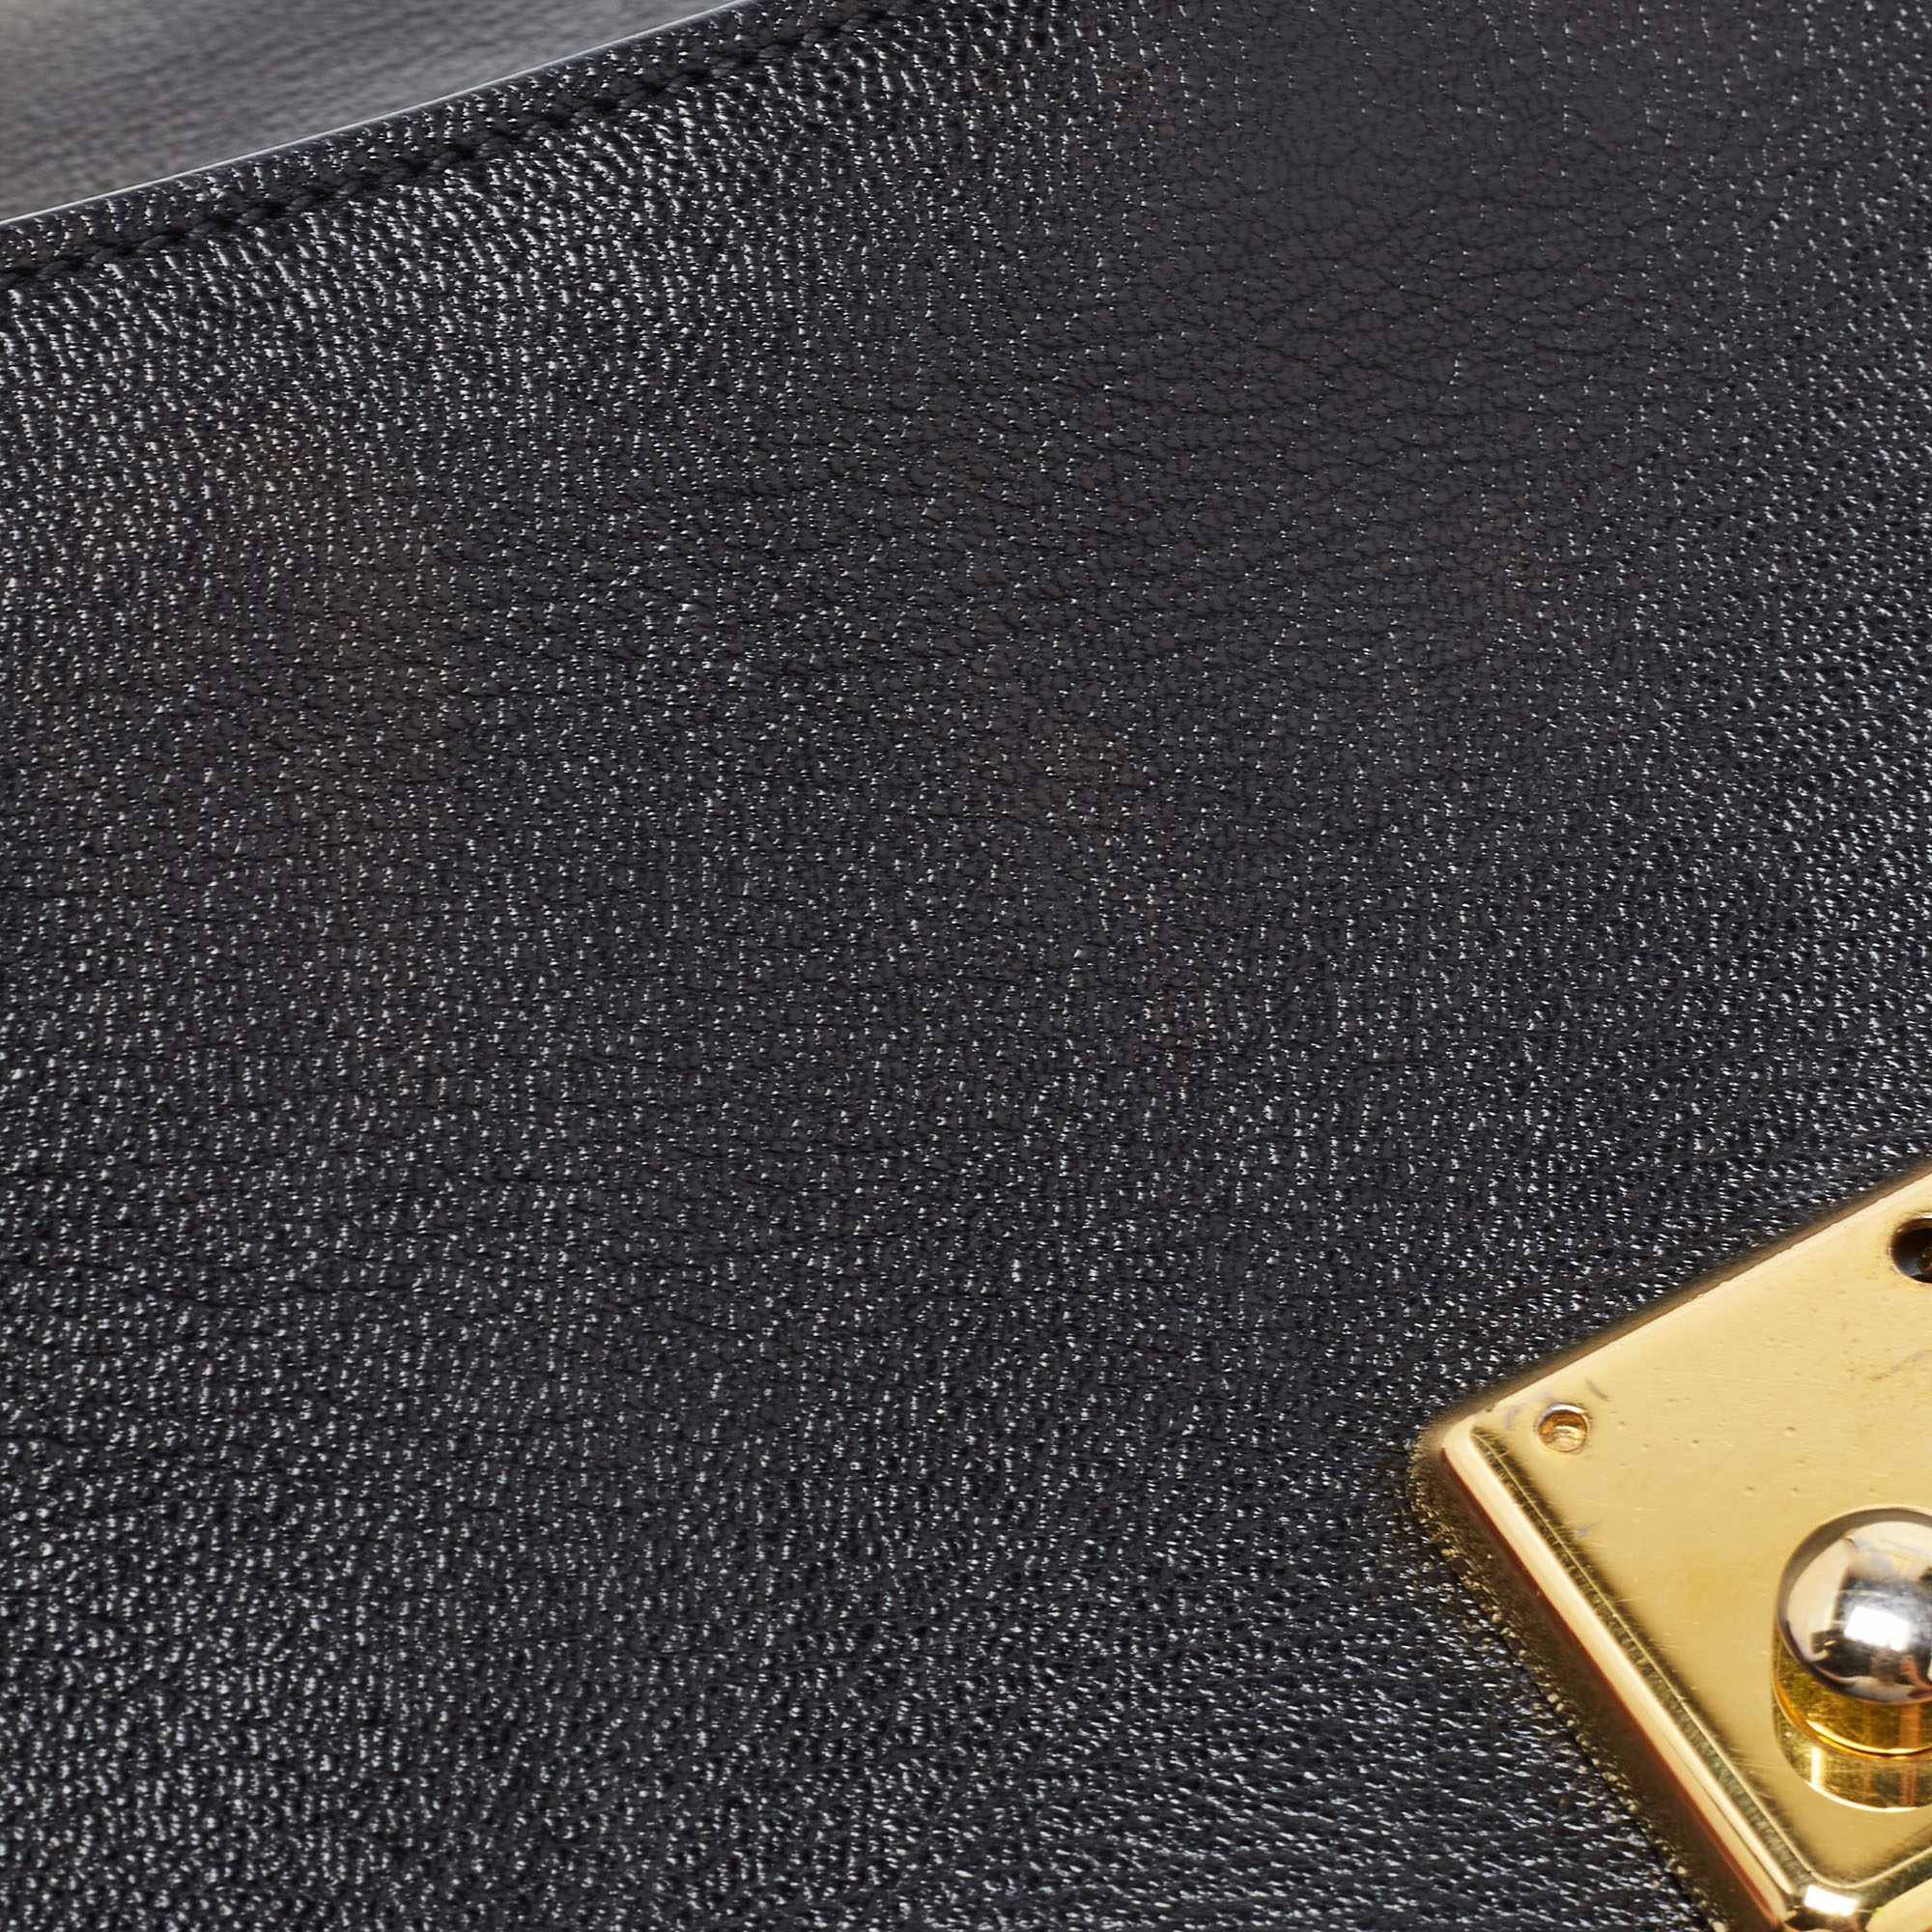 Miu Miu Black/Beige Madras Leather Push Lock Flap Top Handle Bag